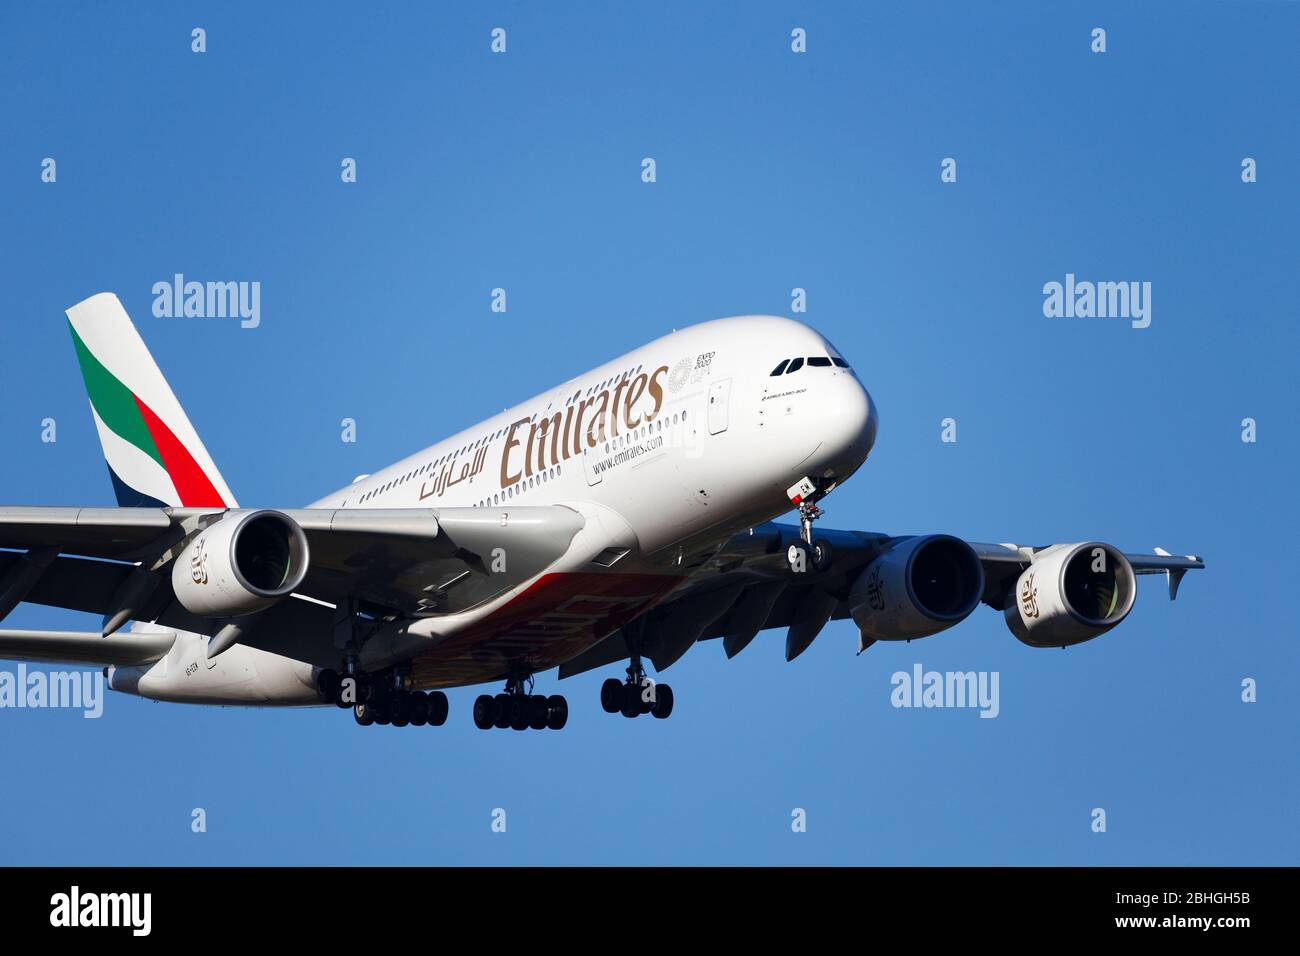 Emirates A-380-800, passenger jet aircraft on landing approach Stock Photo